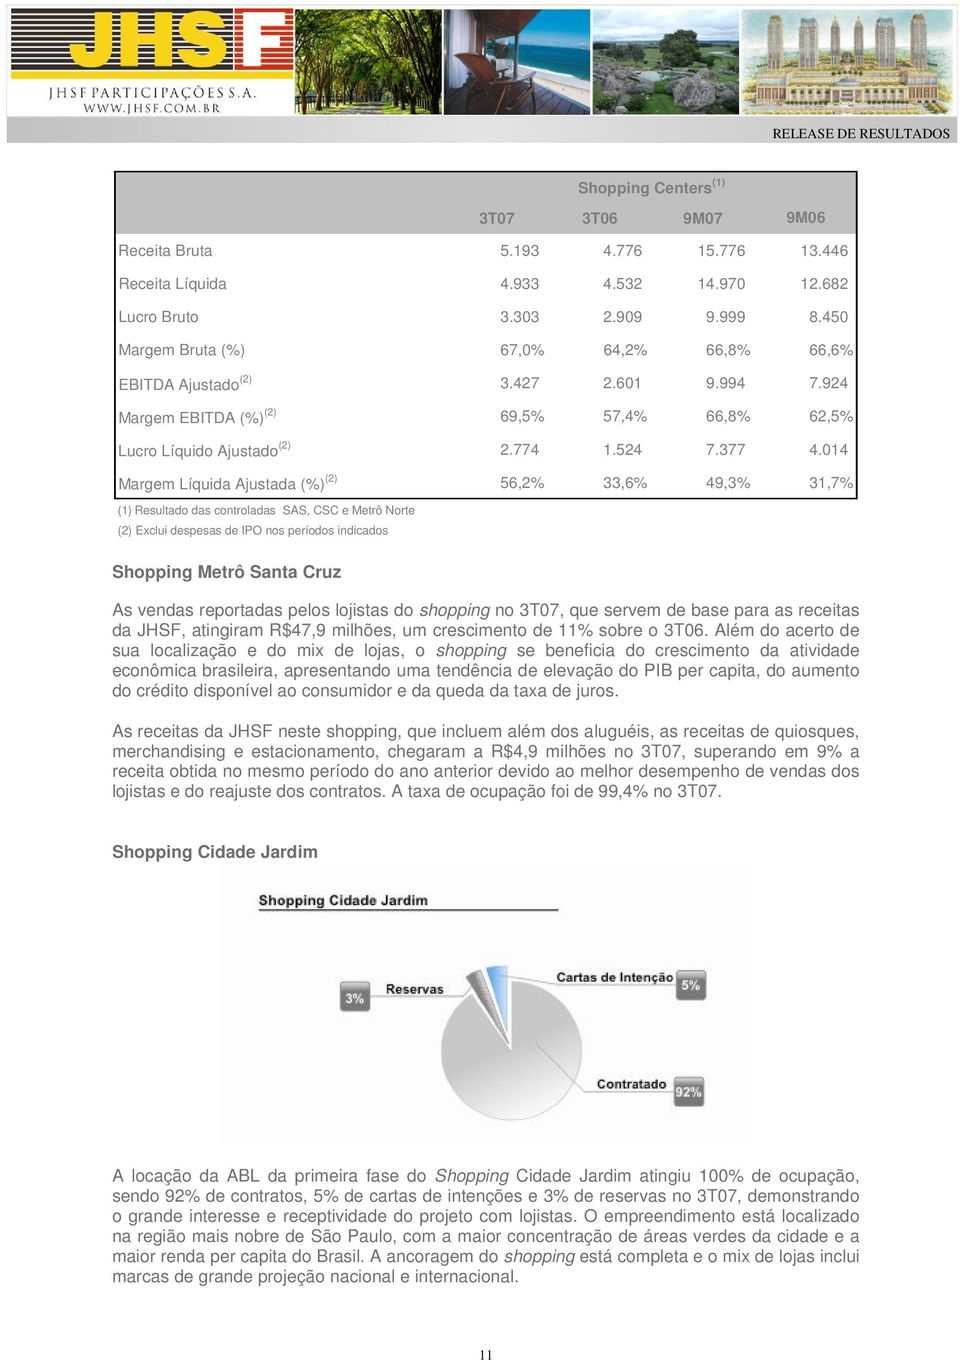 014 Margem Líquida Ajustada (%) (2) 56,2% 33,6% 49,3% 31,7% (1) Resultado das controladas SAS, CSC e Metrô Norte (2) Exclui despesas de IPO nos períodos indicados Shopping Metrô Santa Cruz As vendas